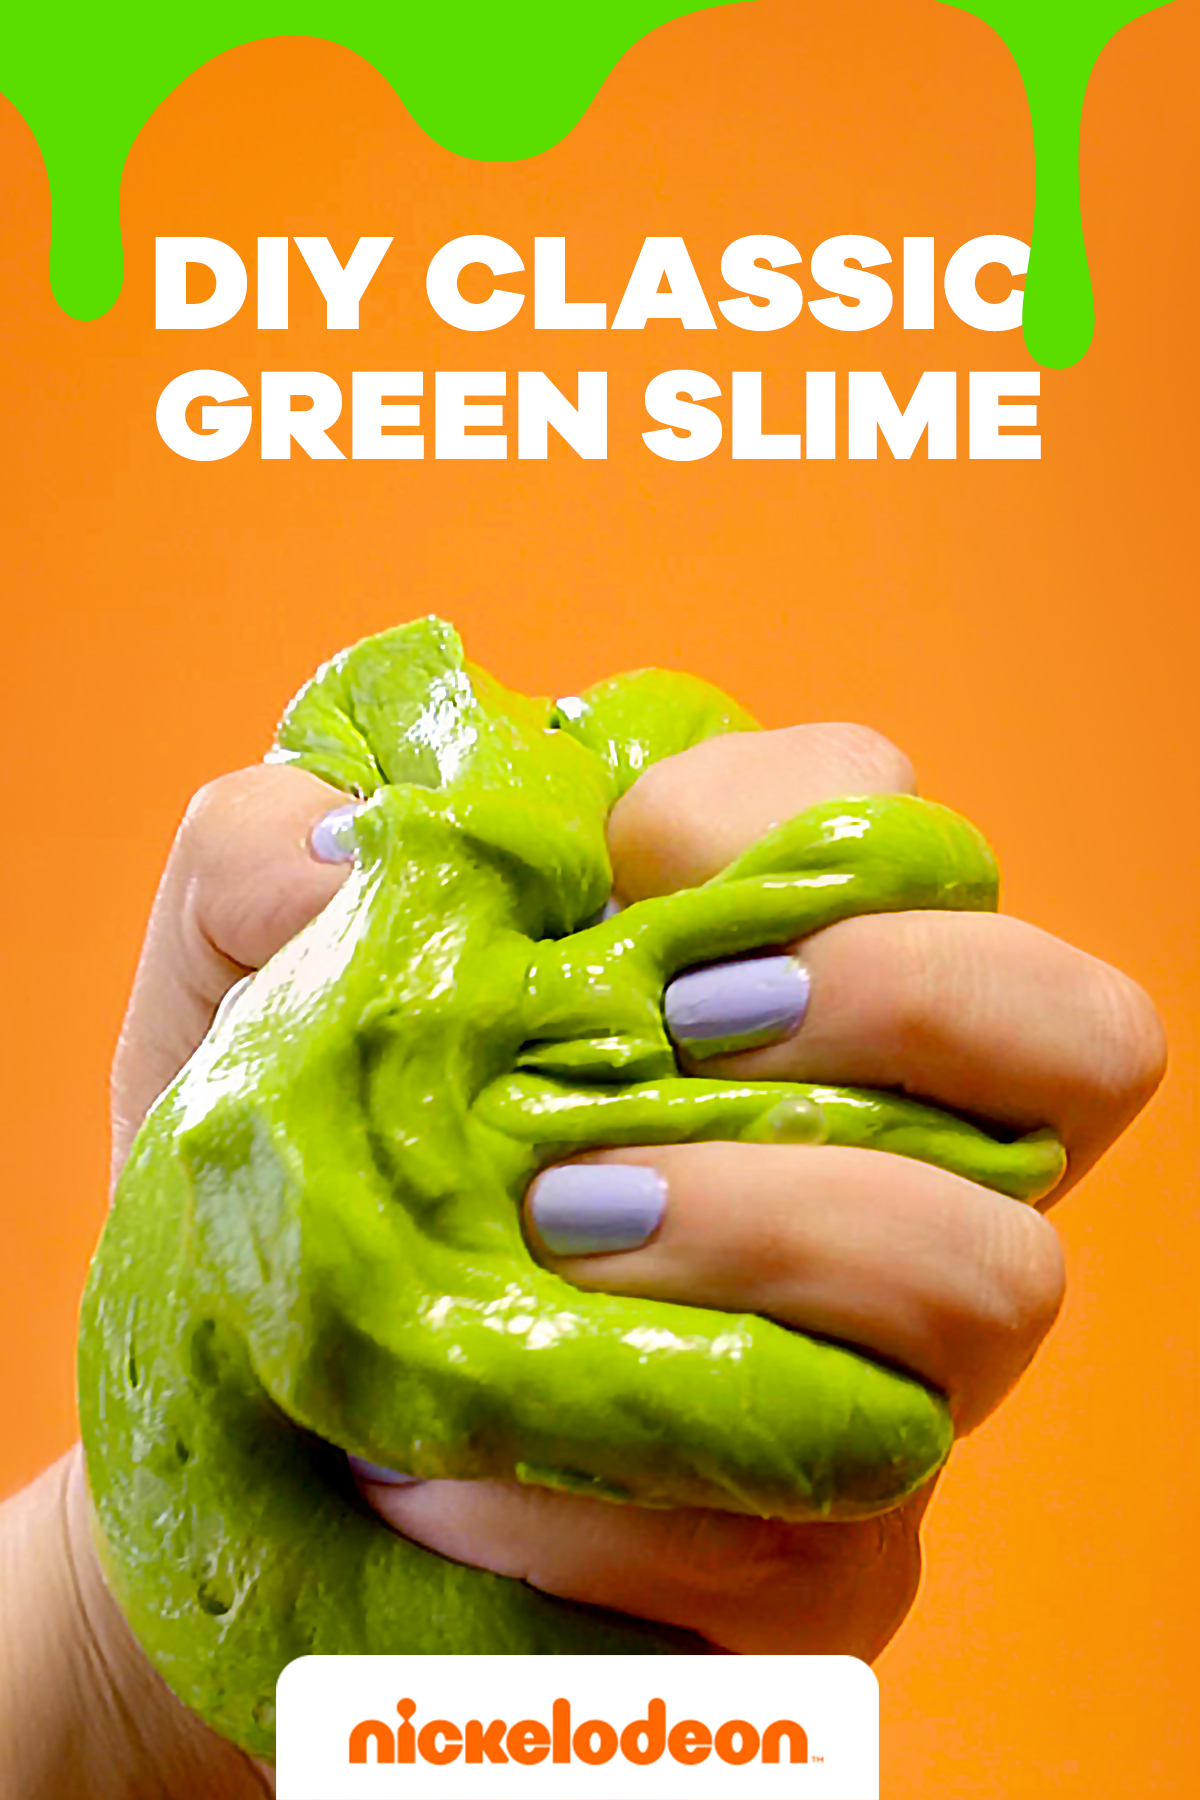 Slime Nick Experience